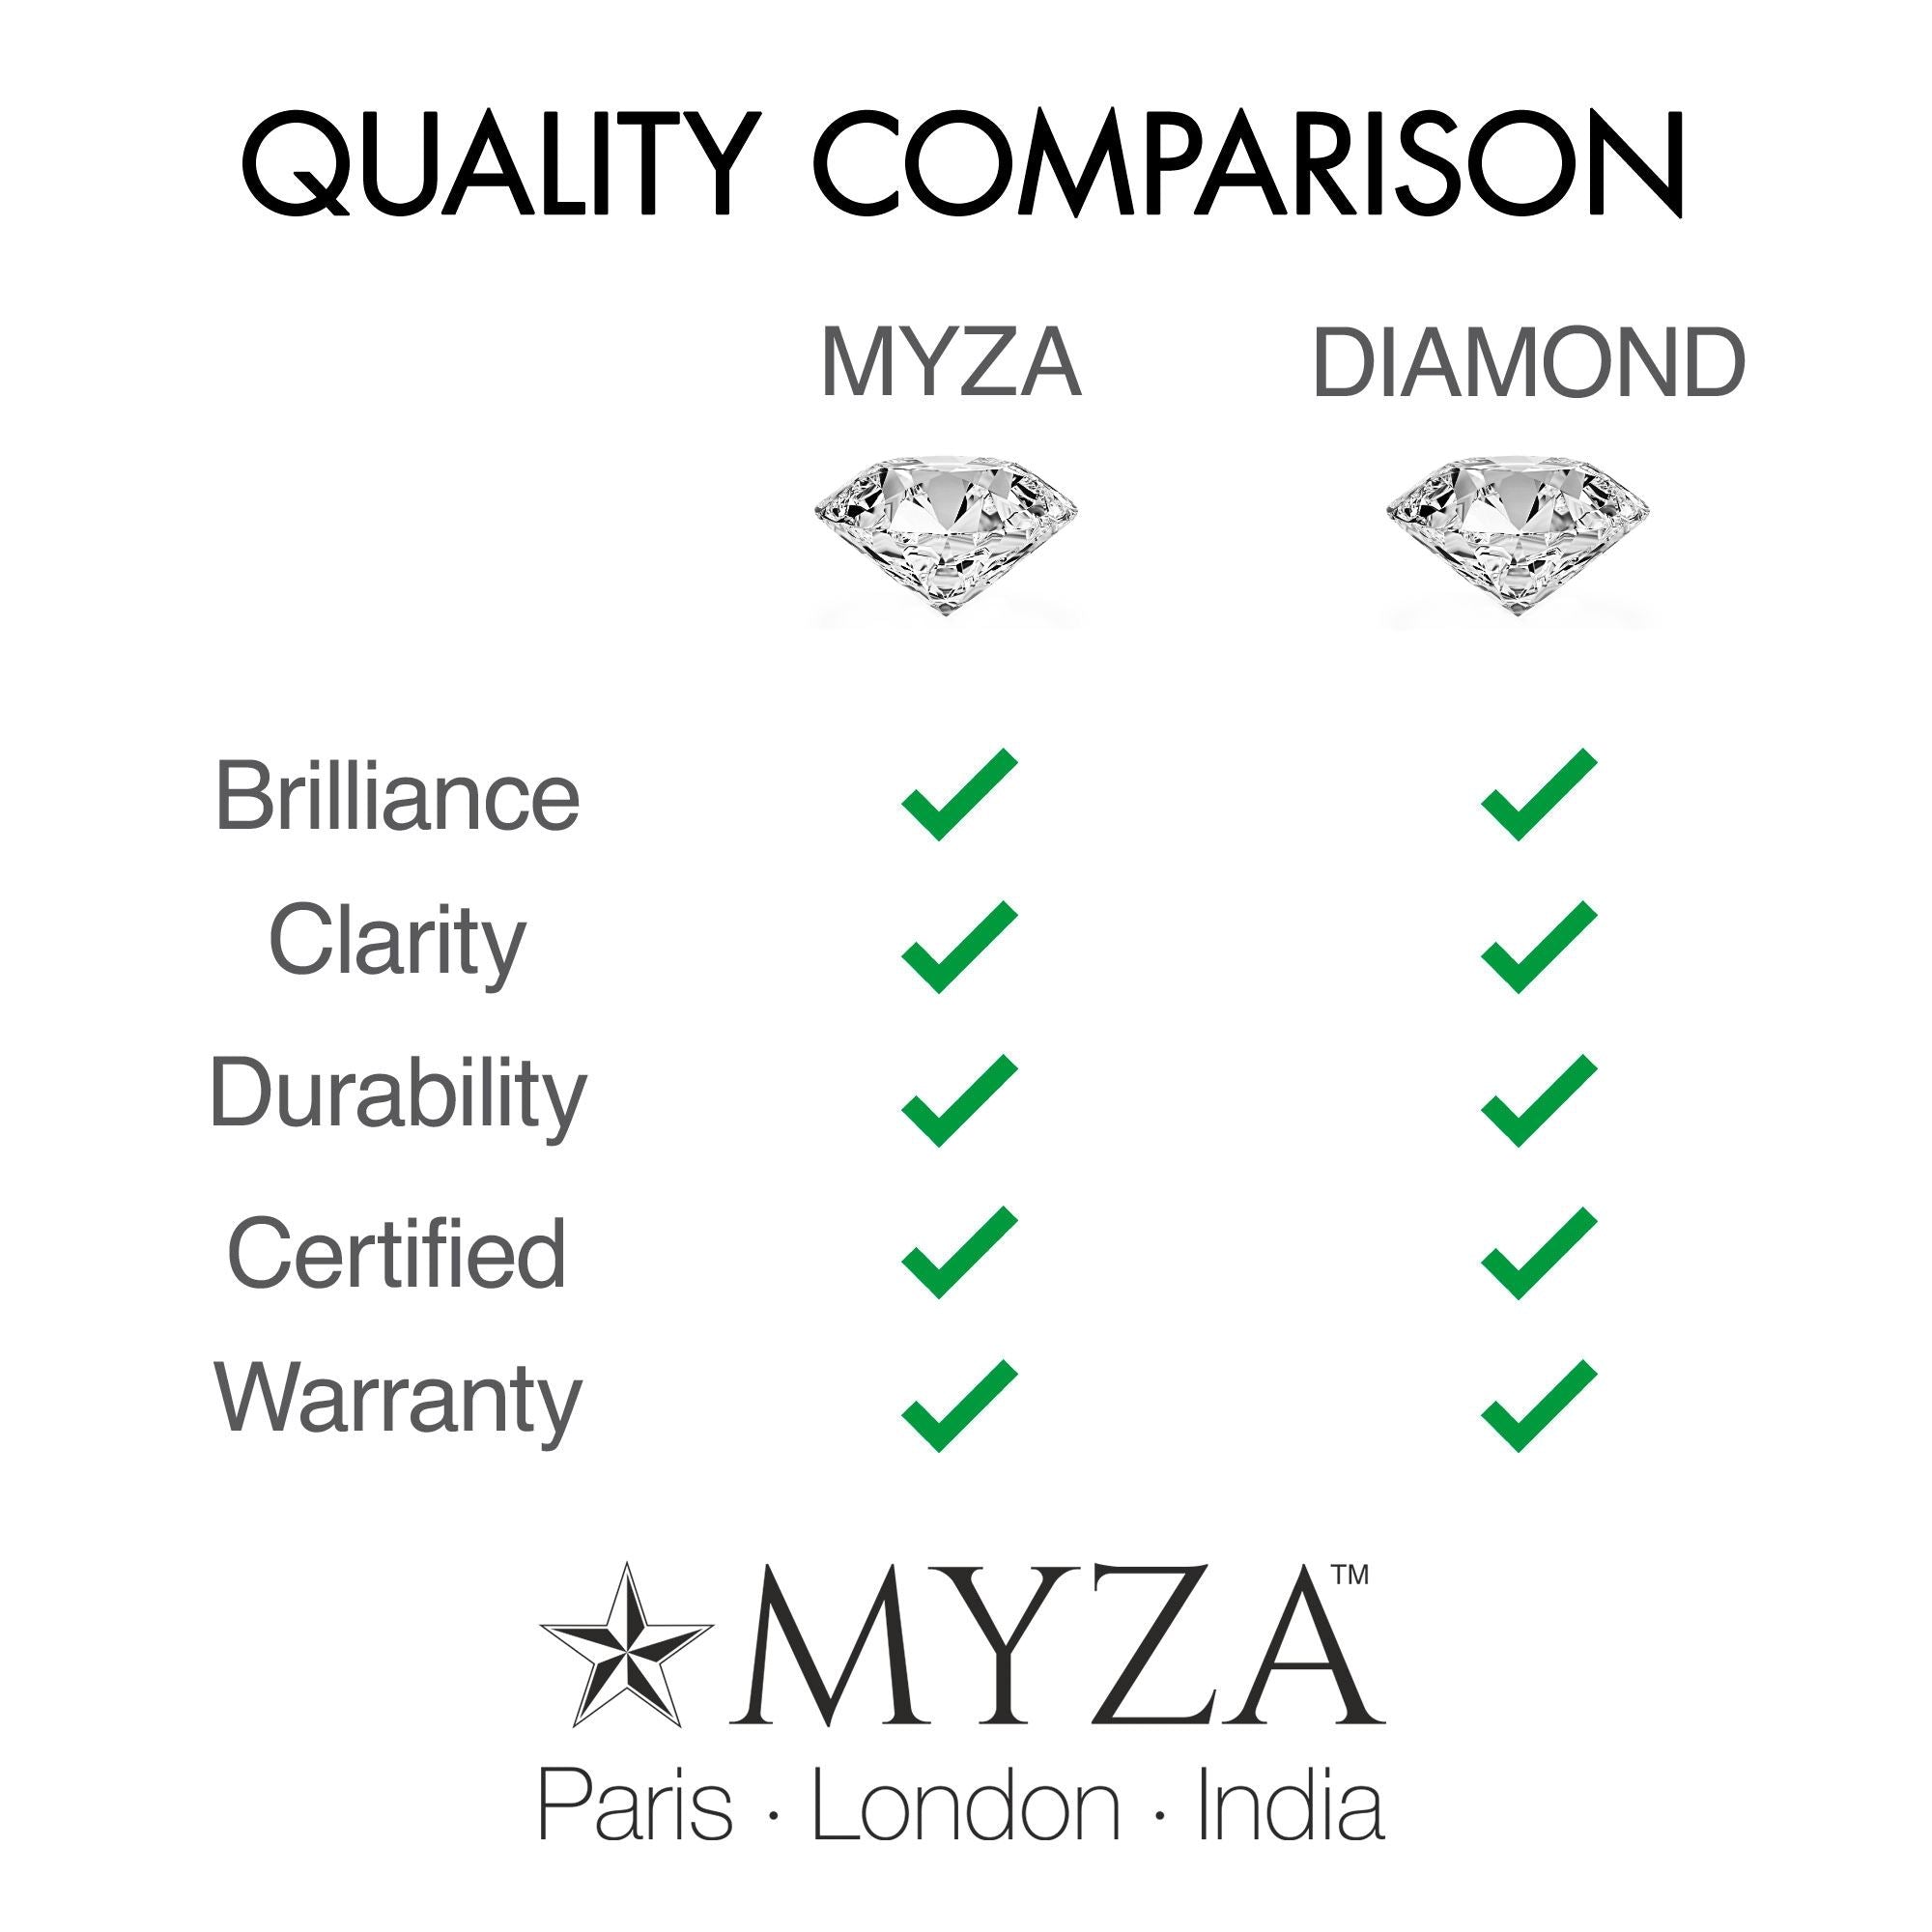 2-Carat MYZA Sterling Silver Earrings & Ring Combo - MYZA 